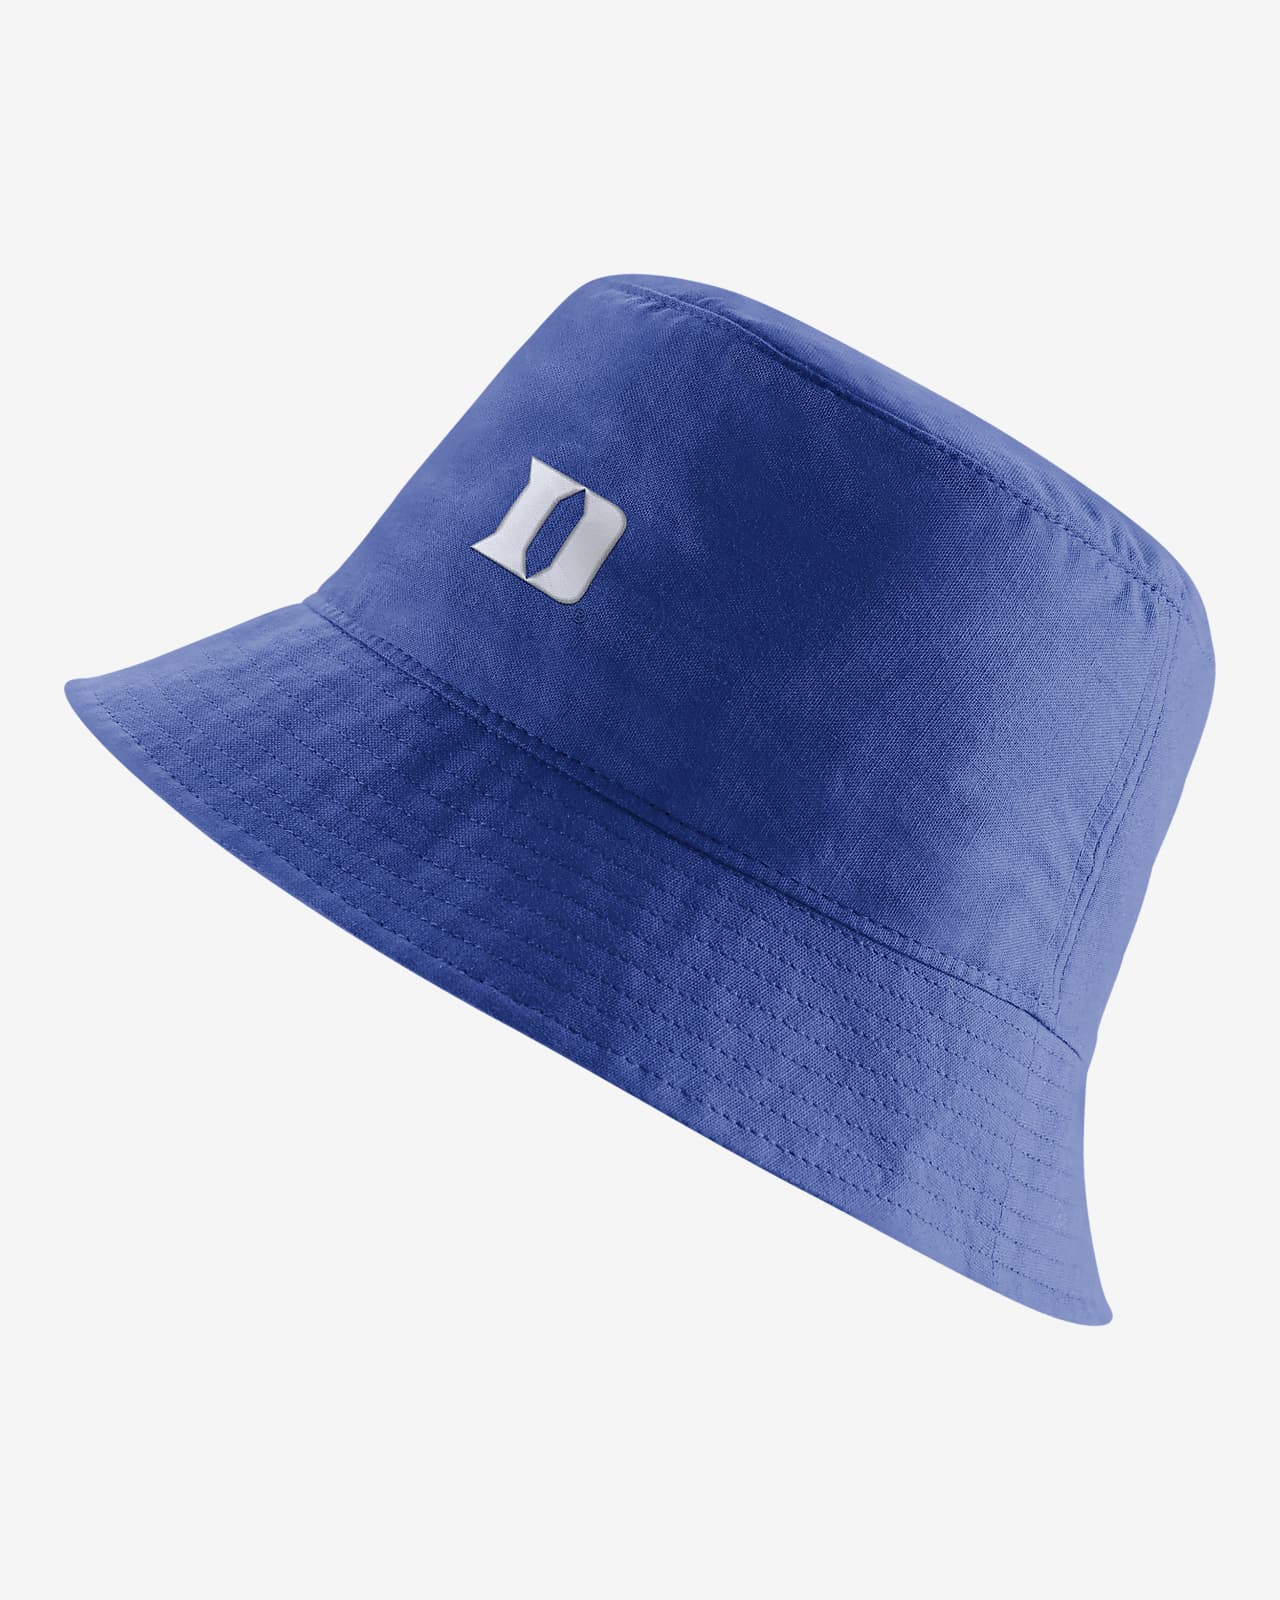 Duke Nike College Bucket Hat